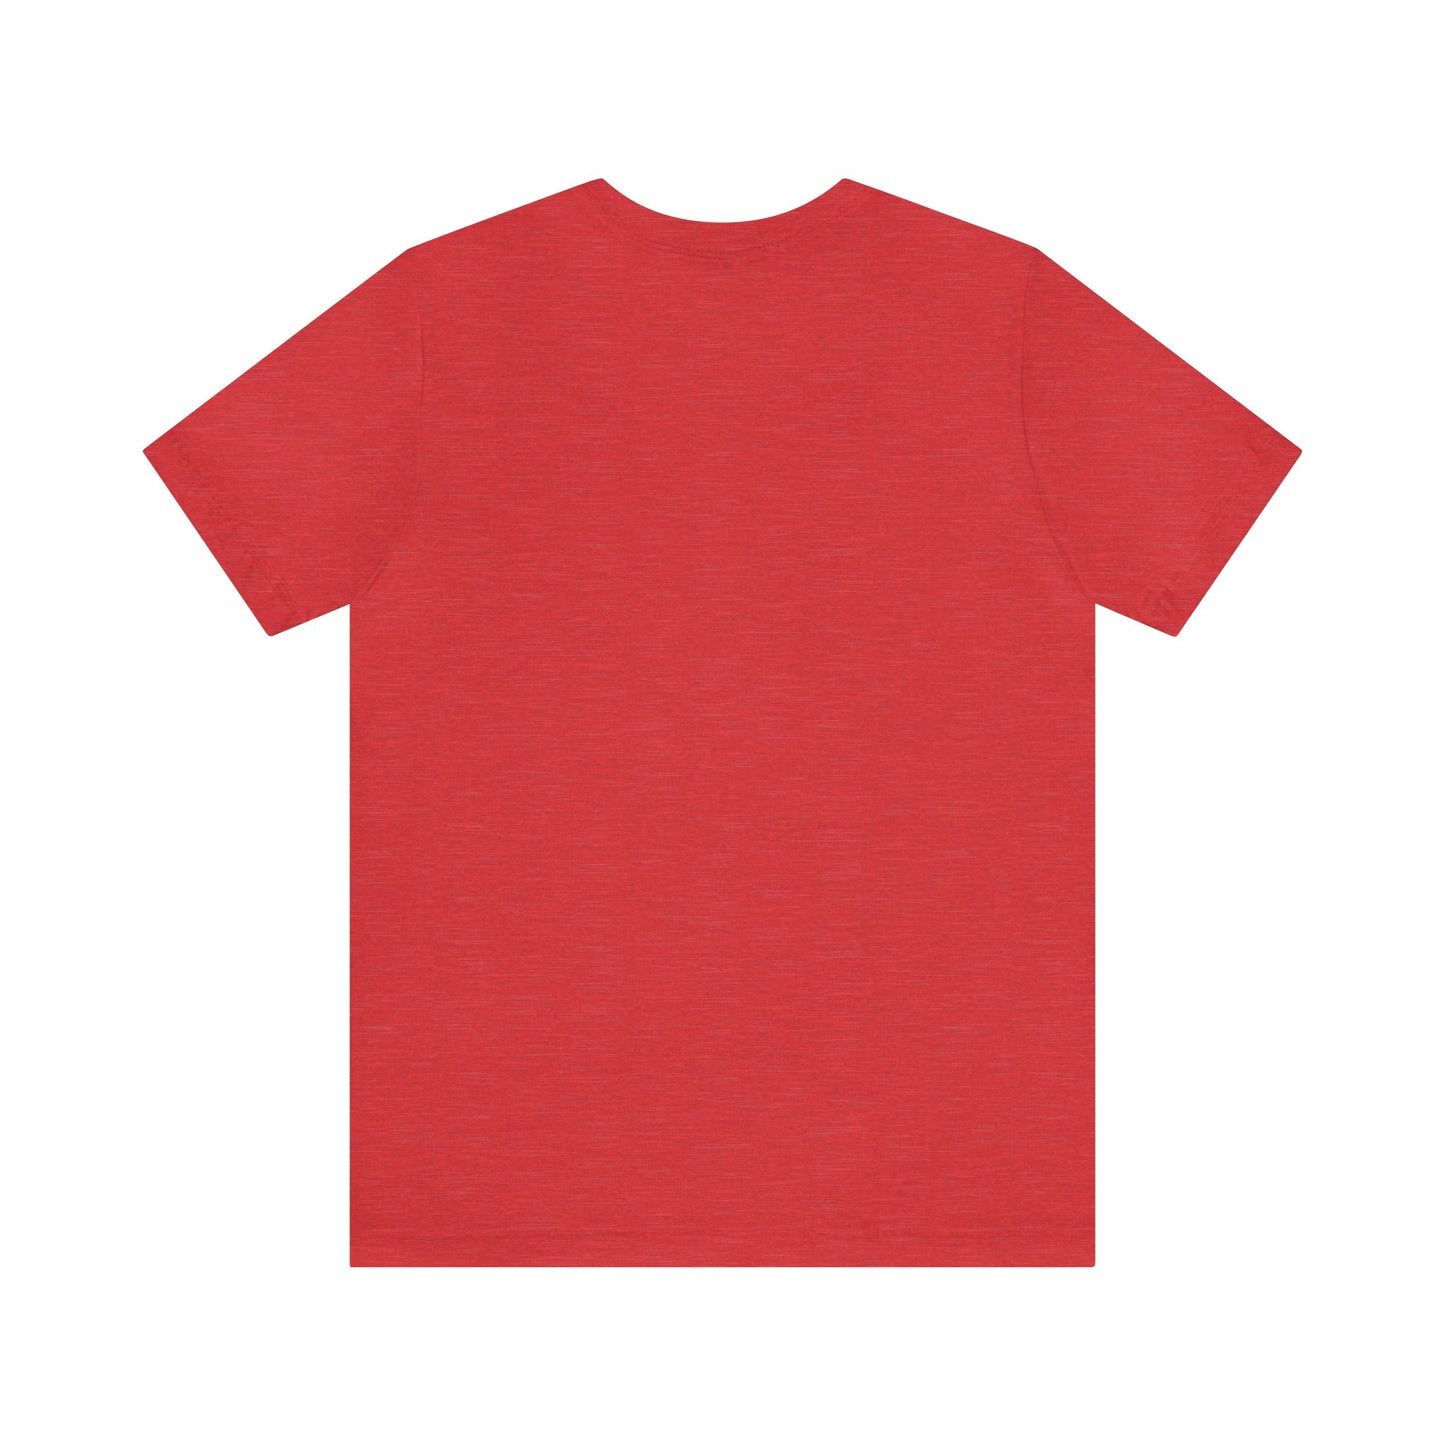 Let James Cook T-Shirt